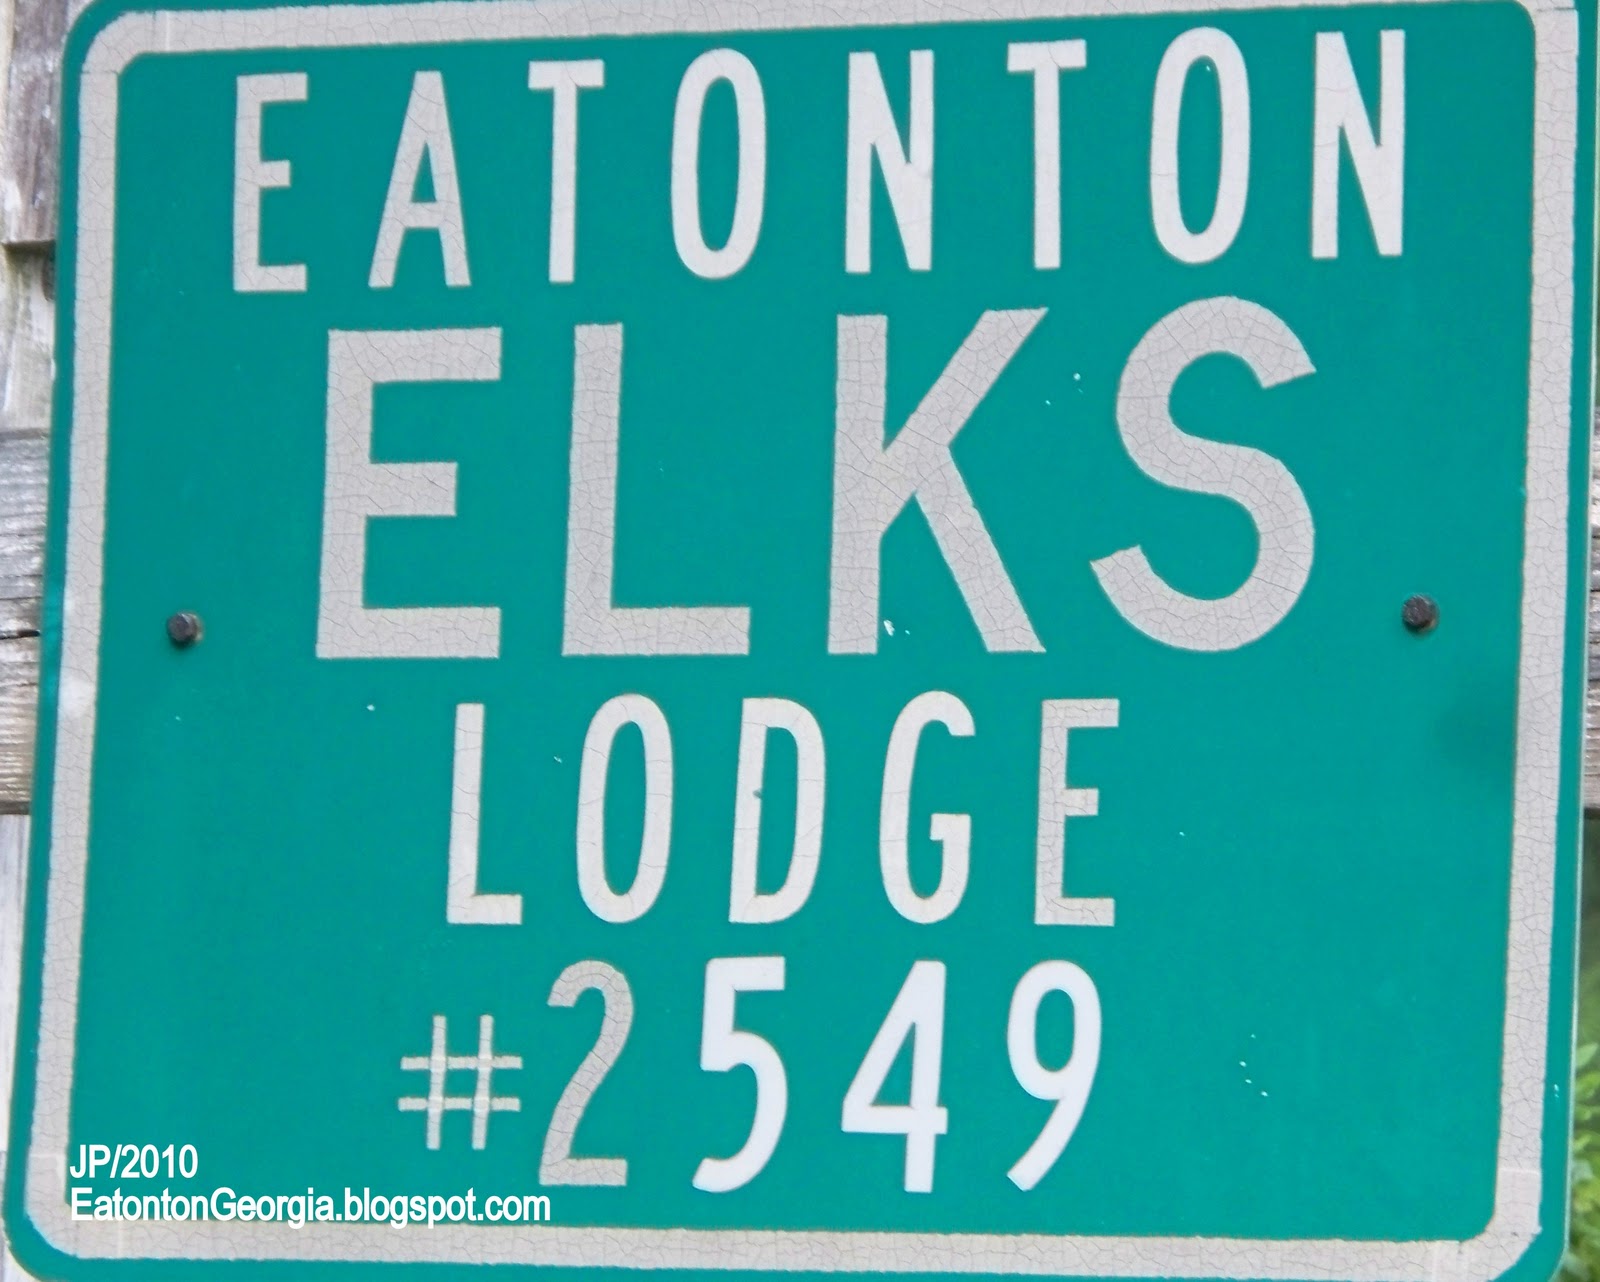 Gioco: Conta per immagini (2251-3000) - Pagina 20 ELKS+LODGE+%232549+Eatonton+Georgia,+Eatonton+Elks+Lodge+Putnam+County+Georgia+club